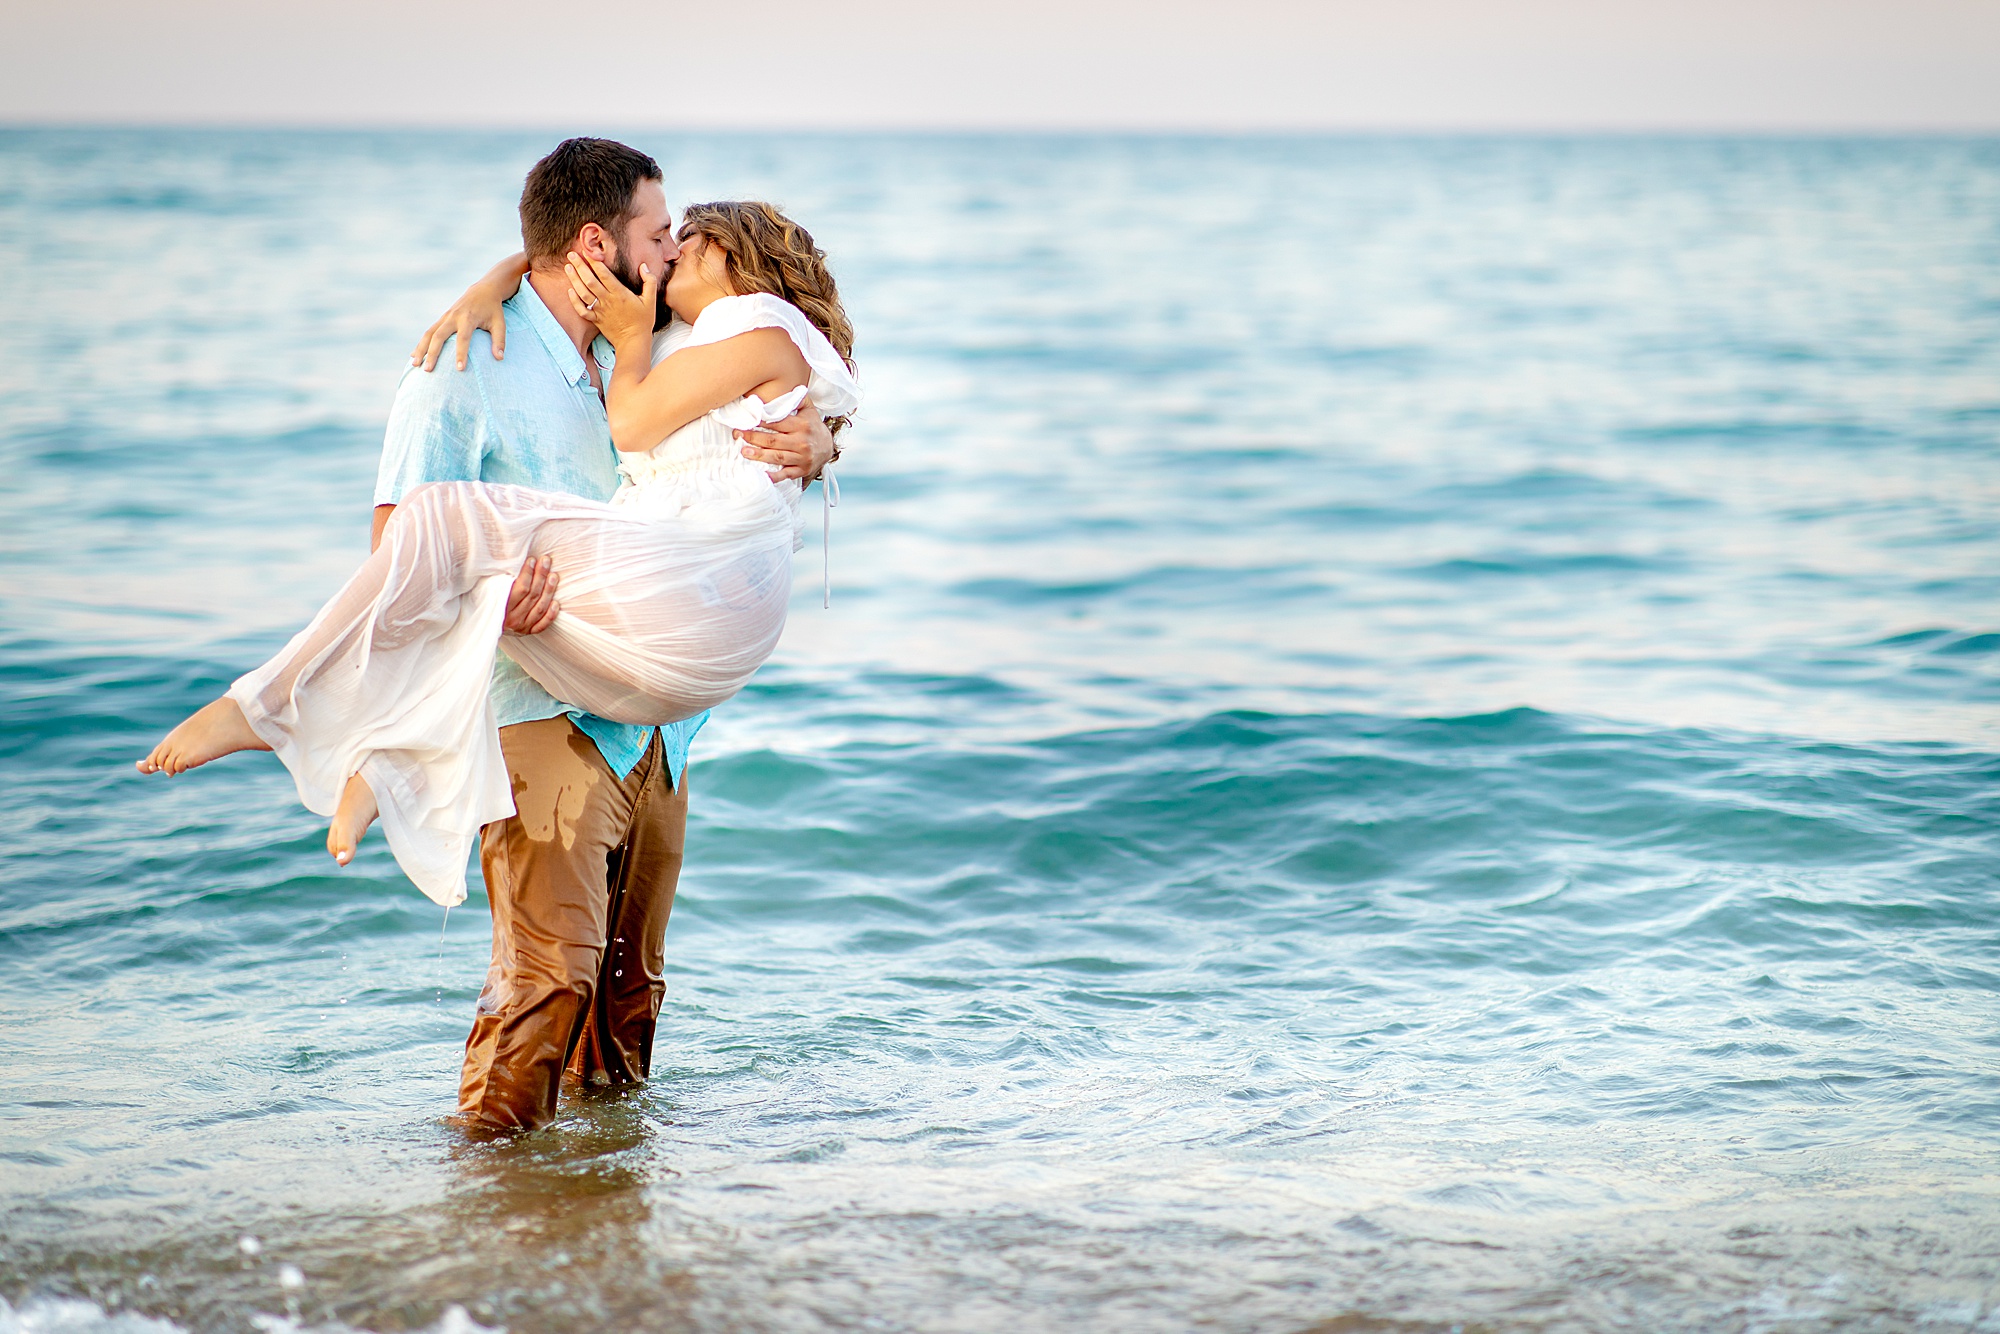 luxury portrait photographer captures couple on beach 